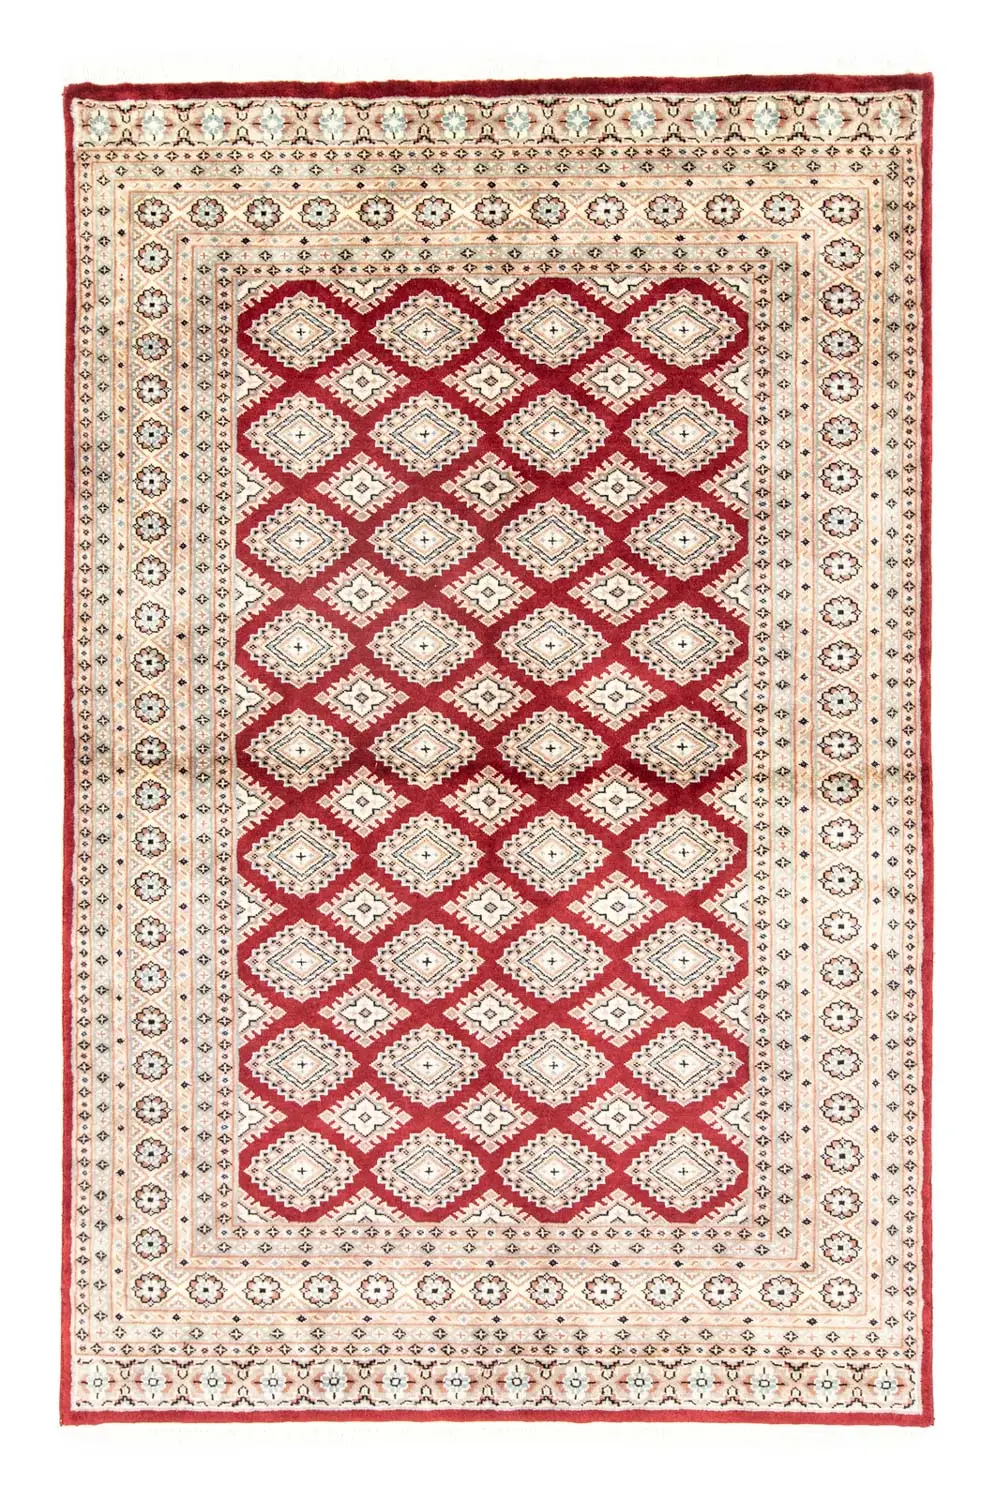 Pakistan Teppich - 198 x 136 cm - rot